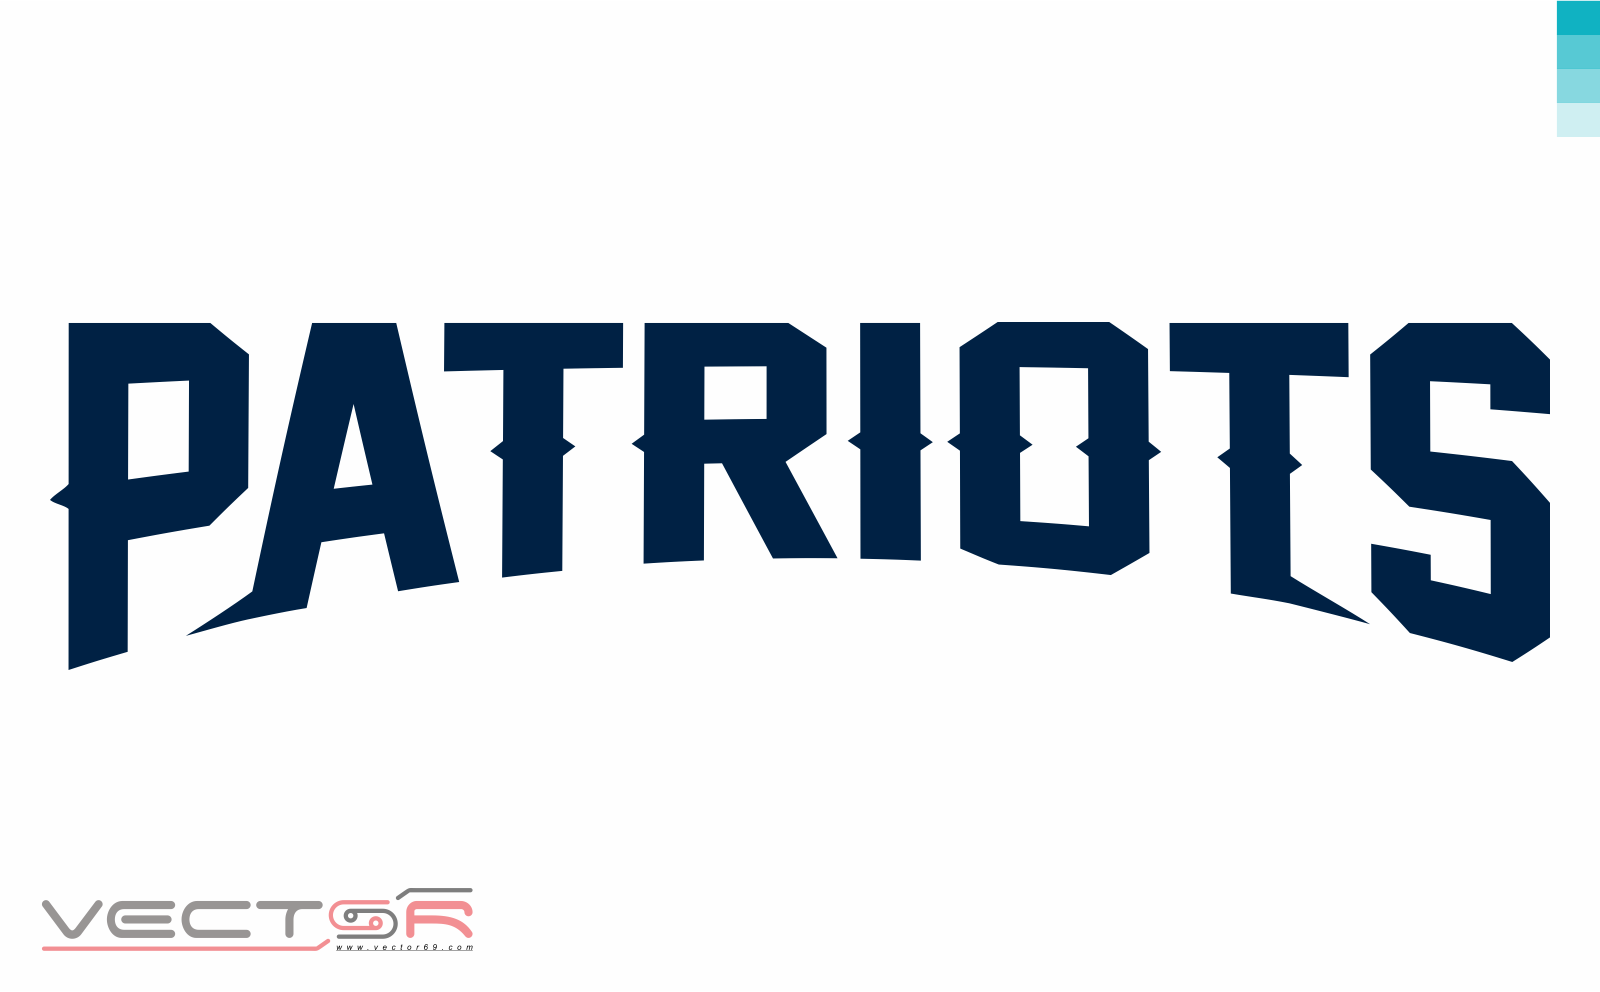 New England Patriots Wordmark - Download Vector File SVG (Scalable Vector Graphics)